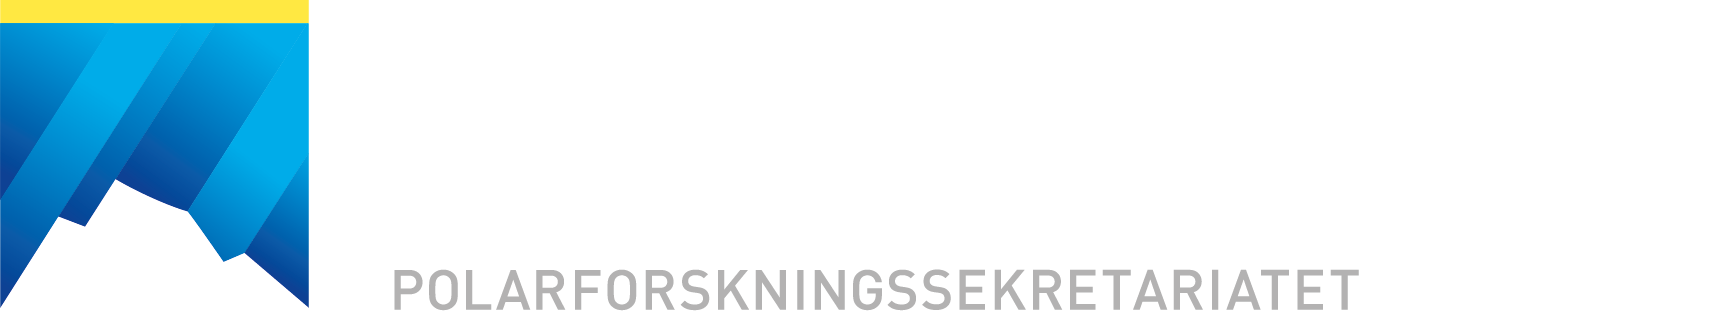 Swedish polar research secretariat